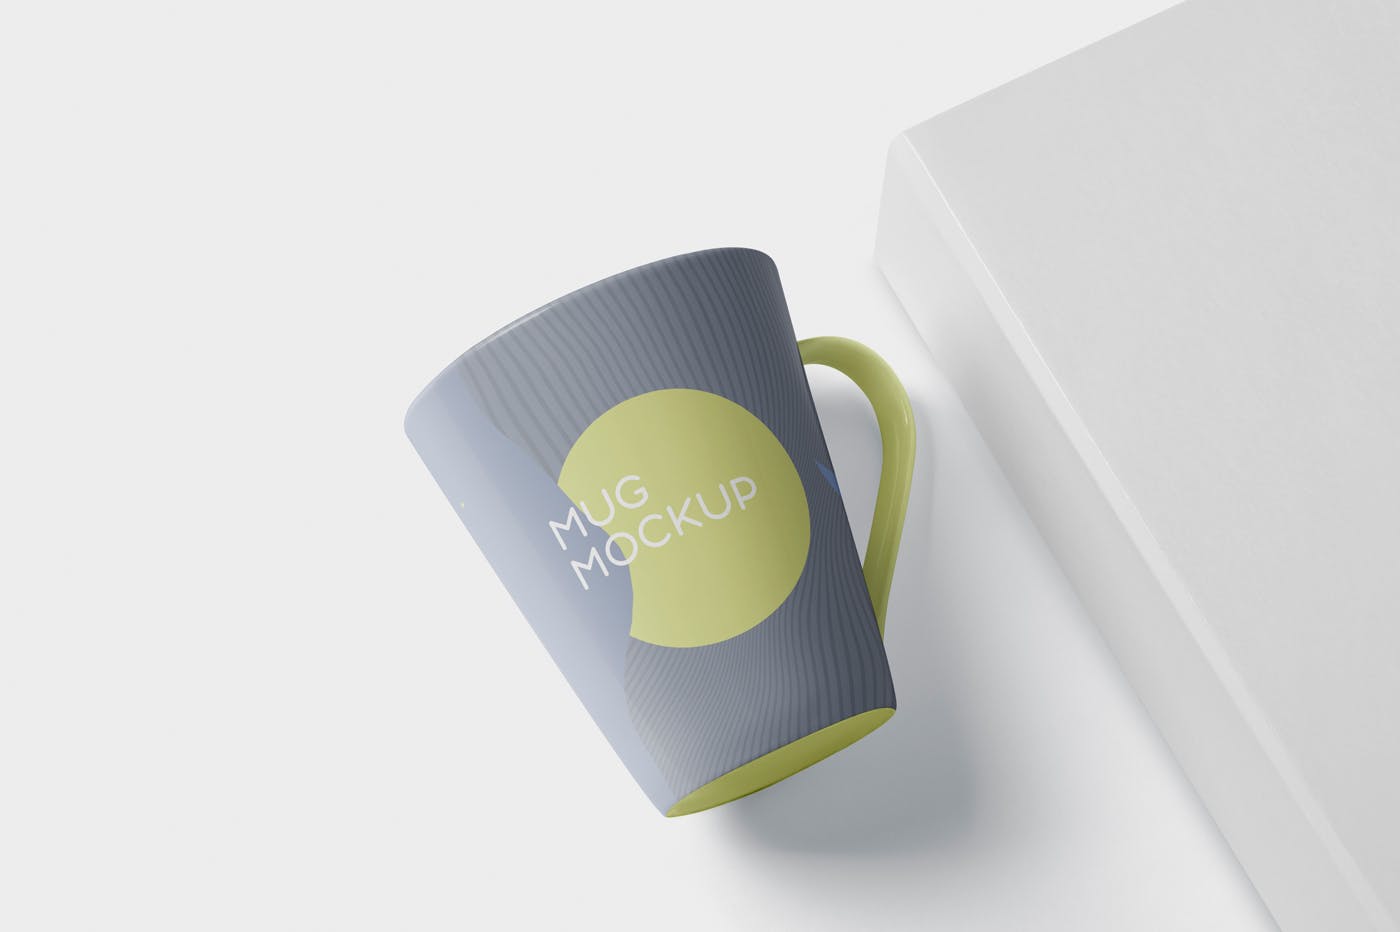 锥形马克杯图案设计非凡图库精选 Mug Mockup – Cone Shaped插图(4)